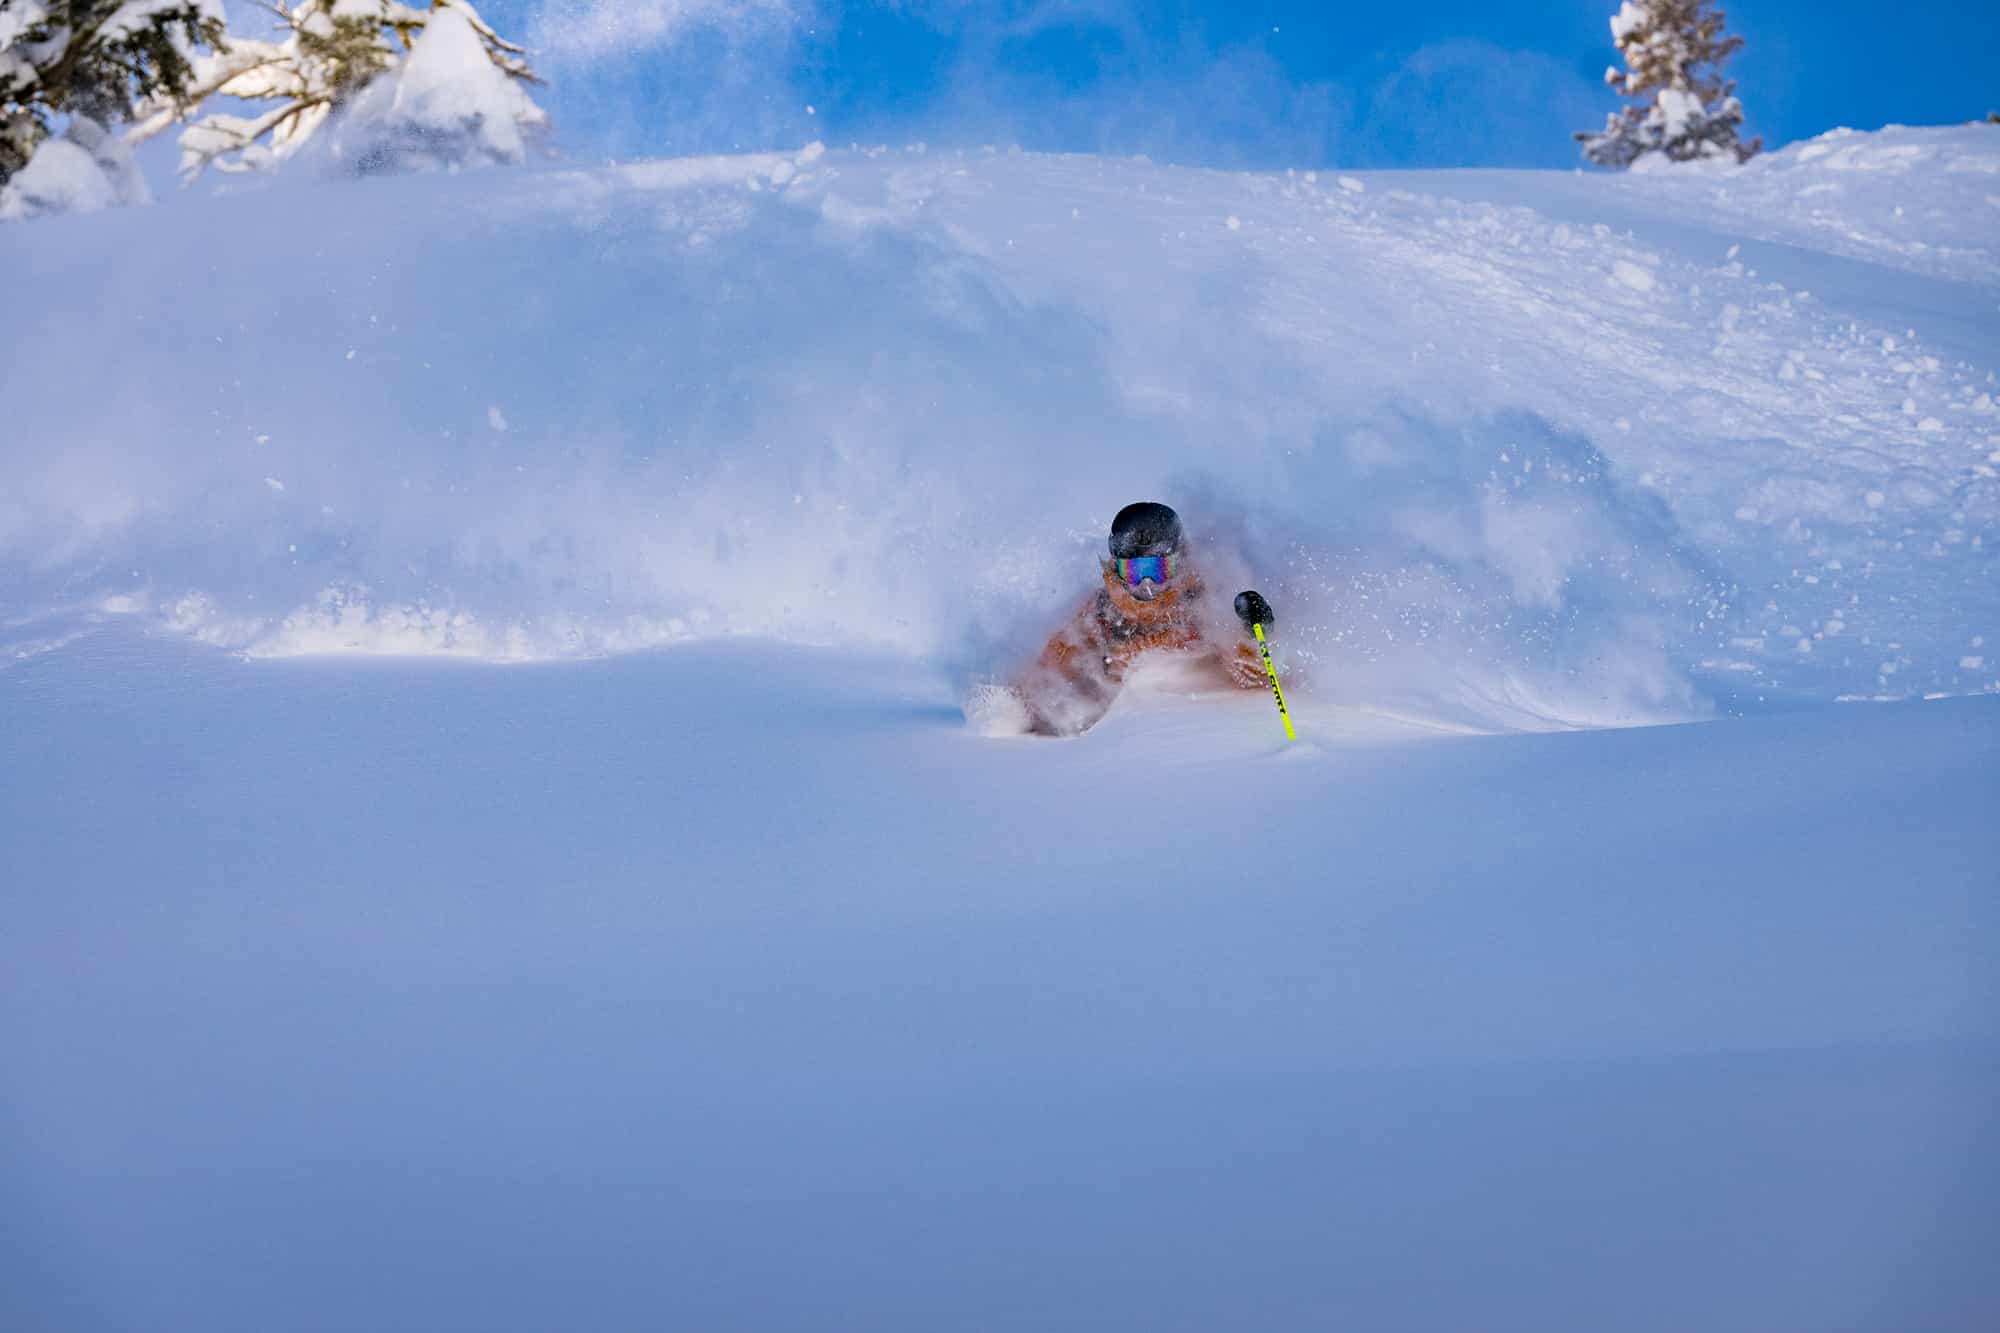 Skier in very deep powder at Palisades Tahoe one of the US's most googled ski resorts